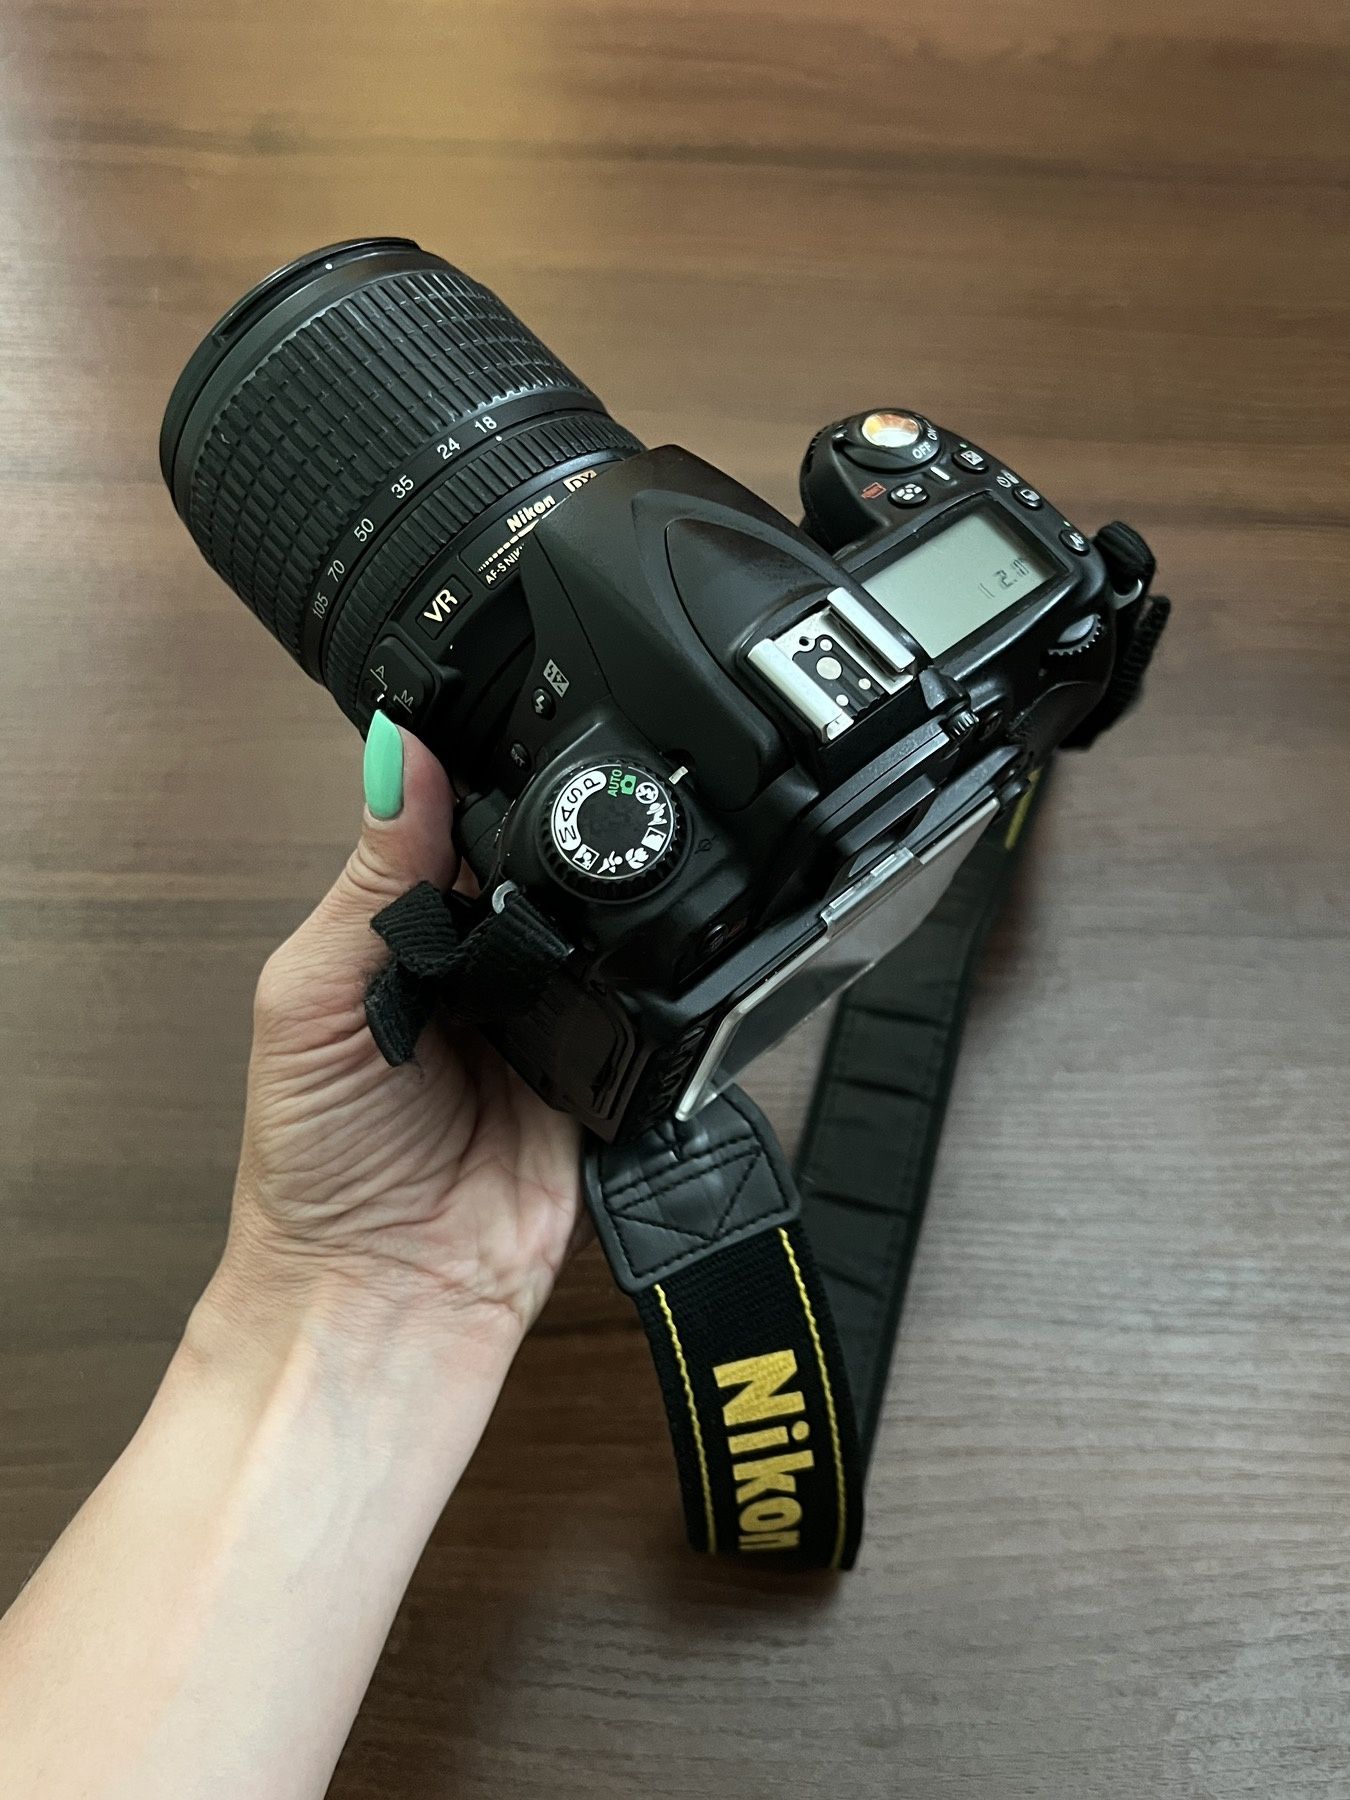 Зеркальный фотоаппарат Nikon D 90,  Nikon SB-800,  Nikon 50 mm

Зеркал